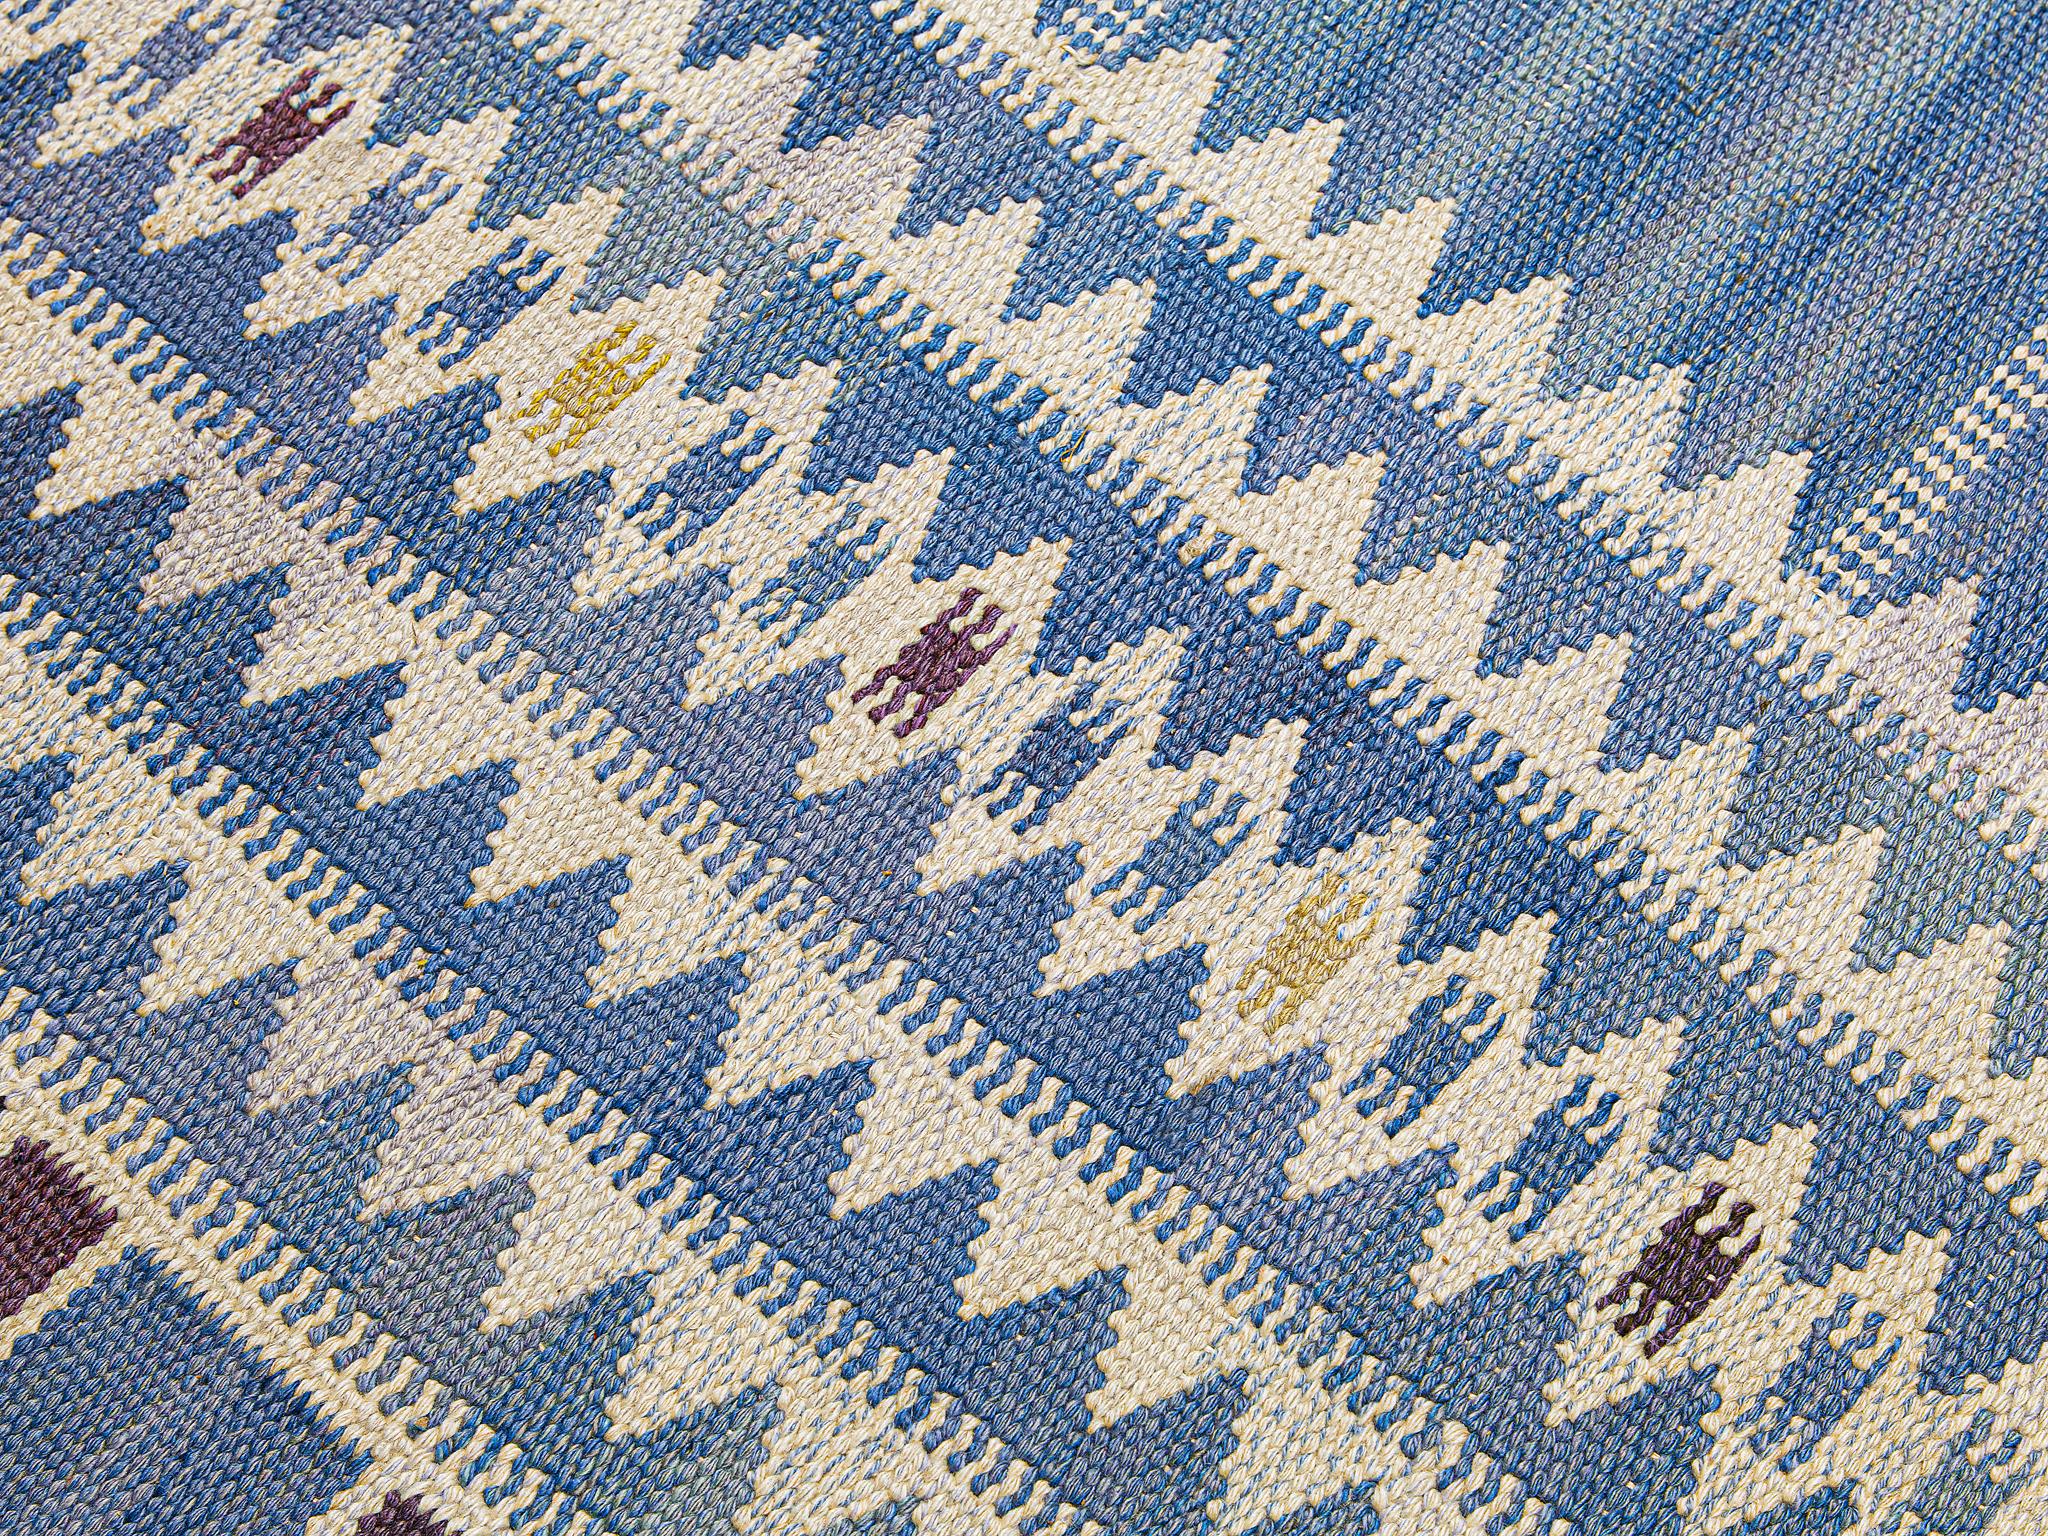 Wool Barbro Nilsson for AB  Märta Måås-Fjetterström 'Salerno' Carpet  For Sale